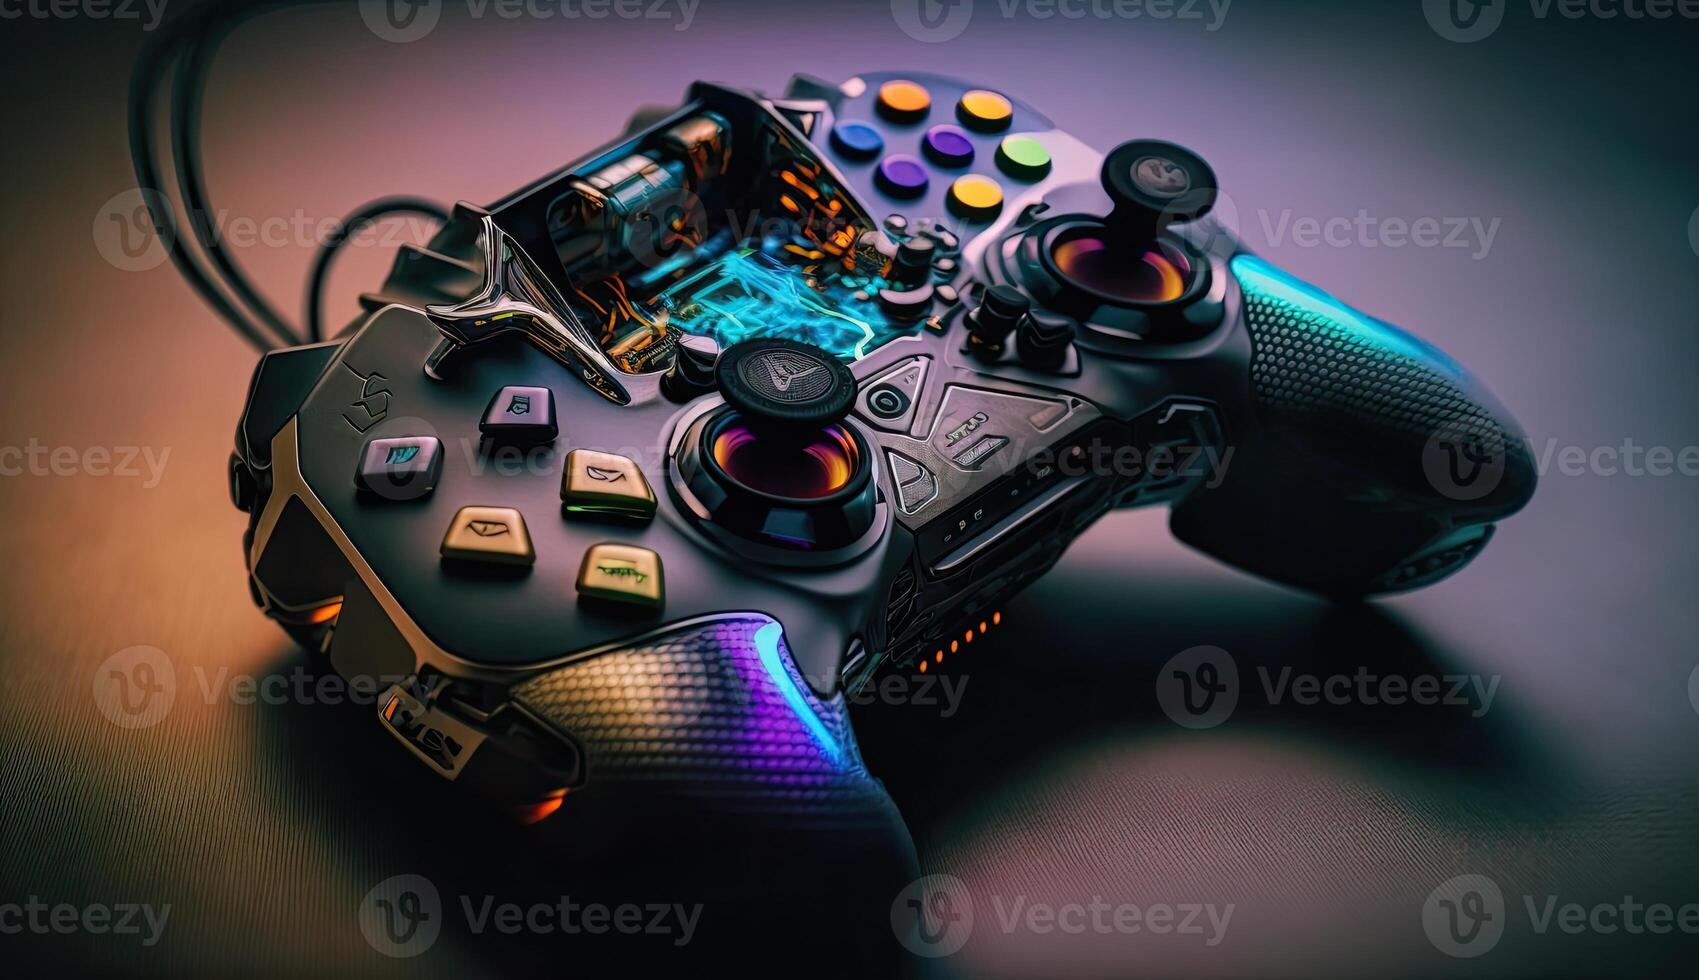 Cyberpunk gaming controller joystick, gamepad illustration photo